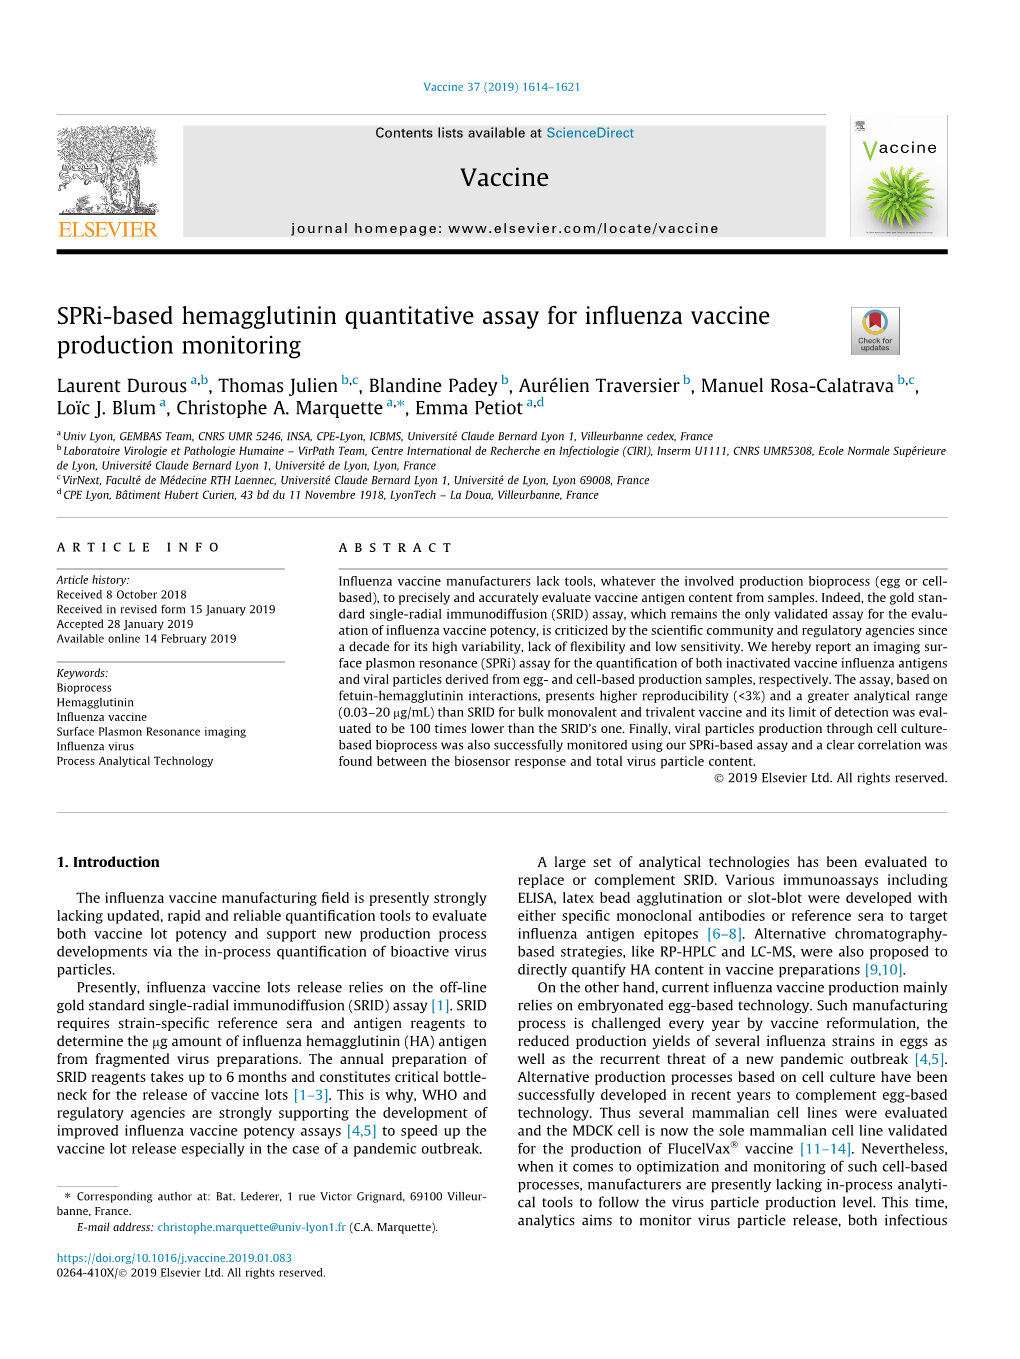 Spri-Based Hemagglutinin Quantitative Assay for Influenza